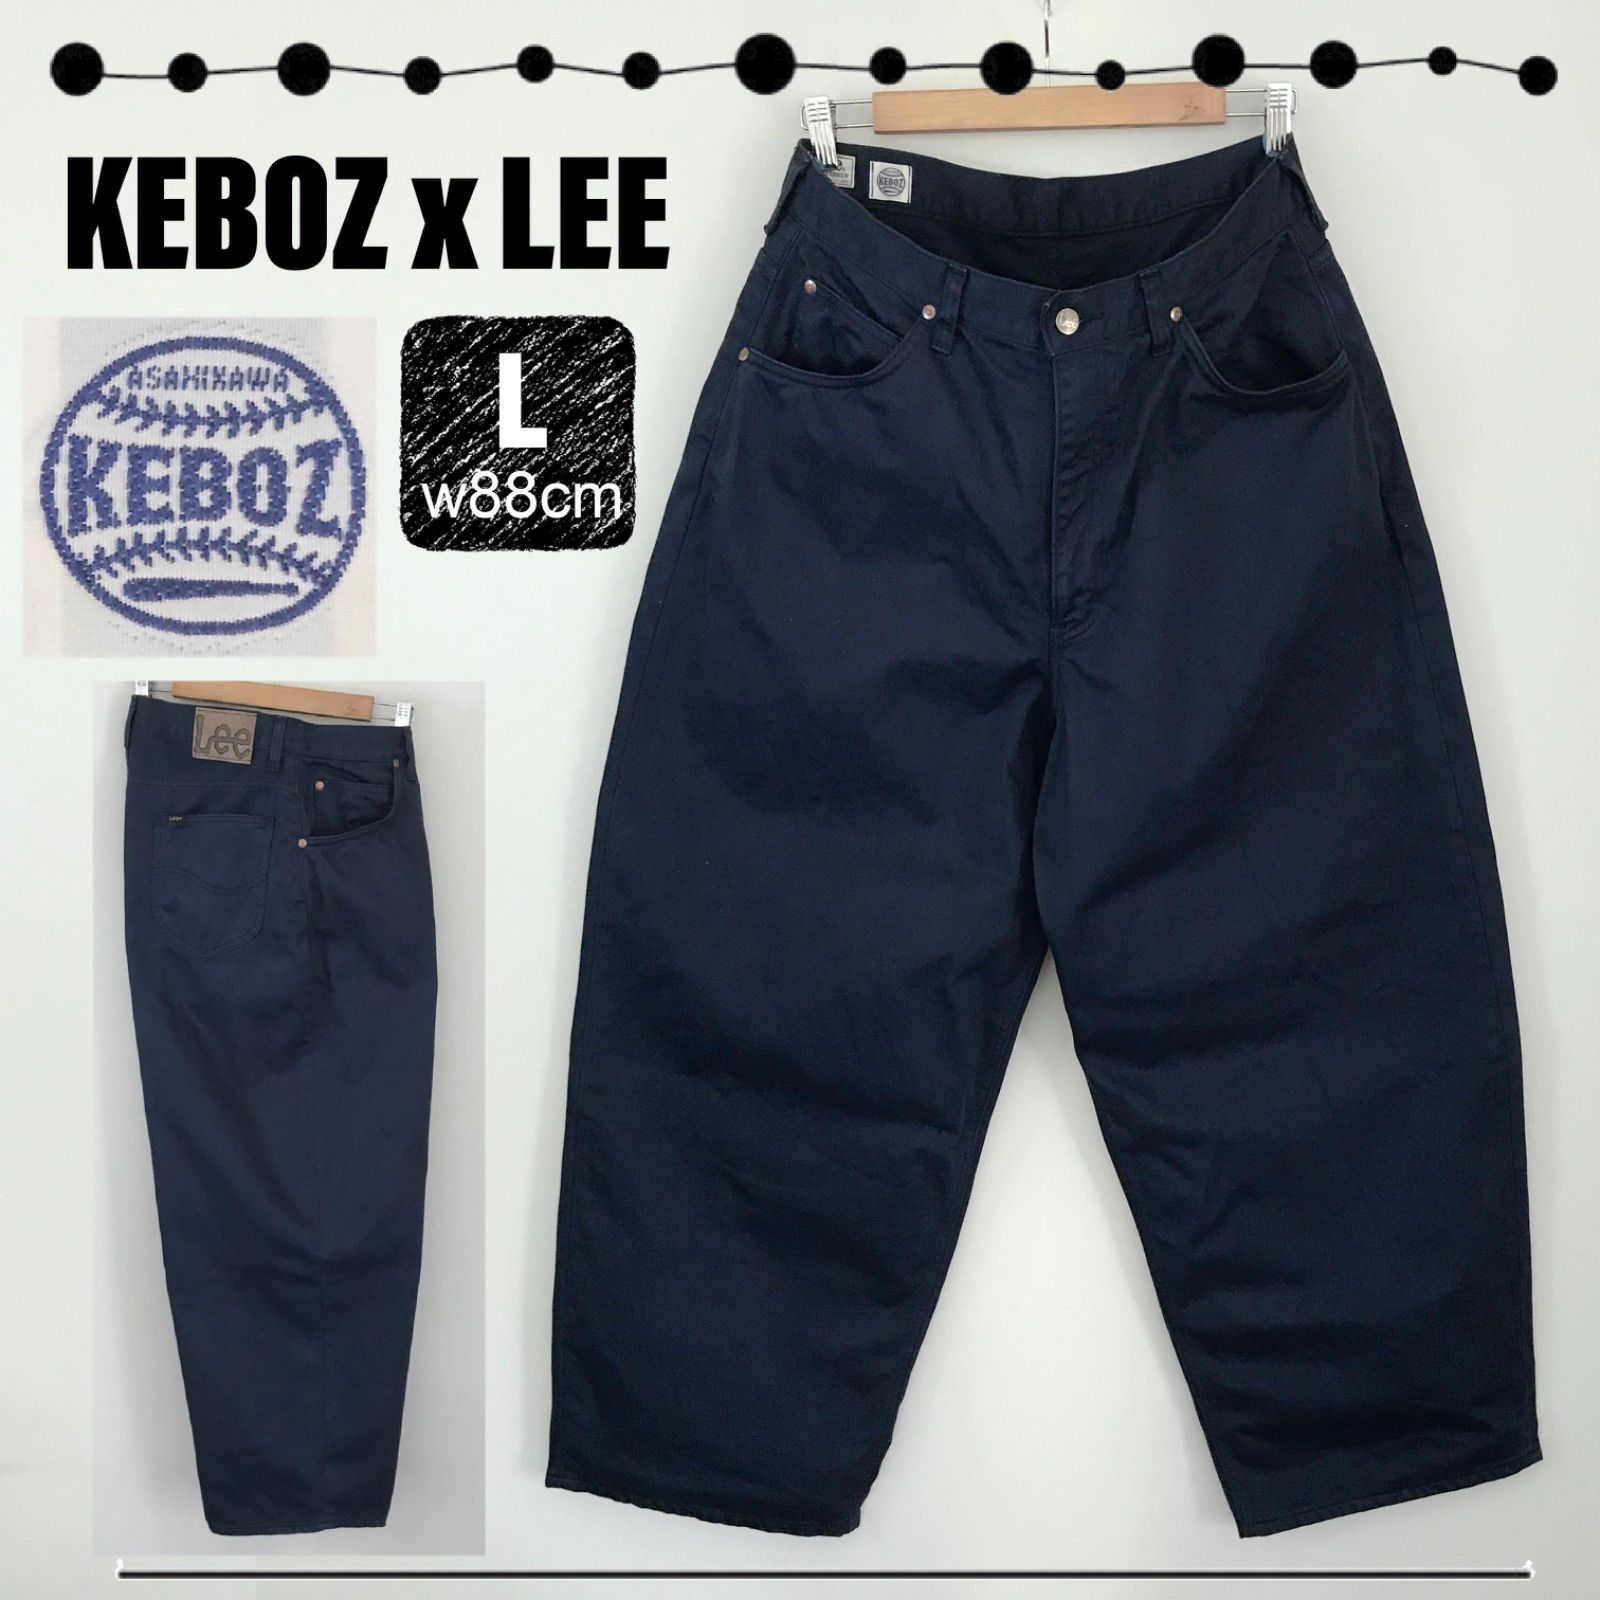 Keboz lee ケボズ リー パンツ ネイビー XL